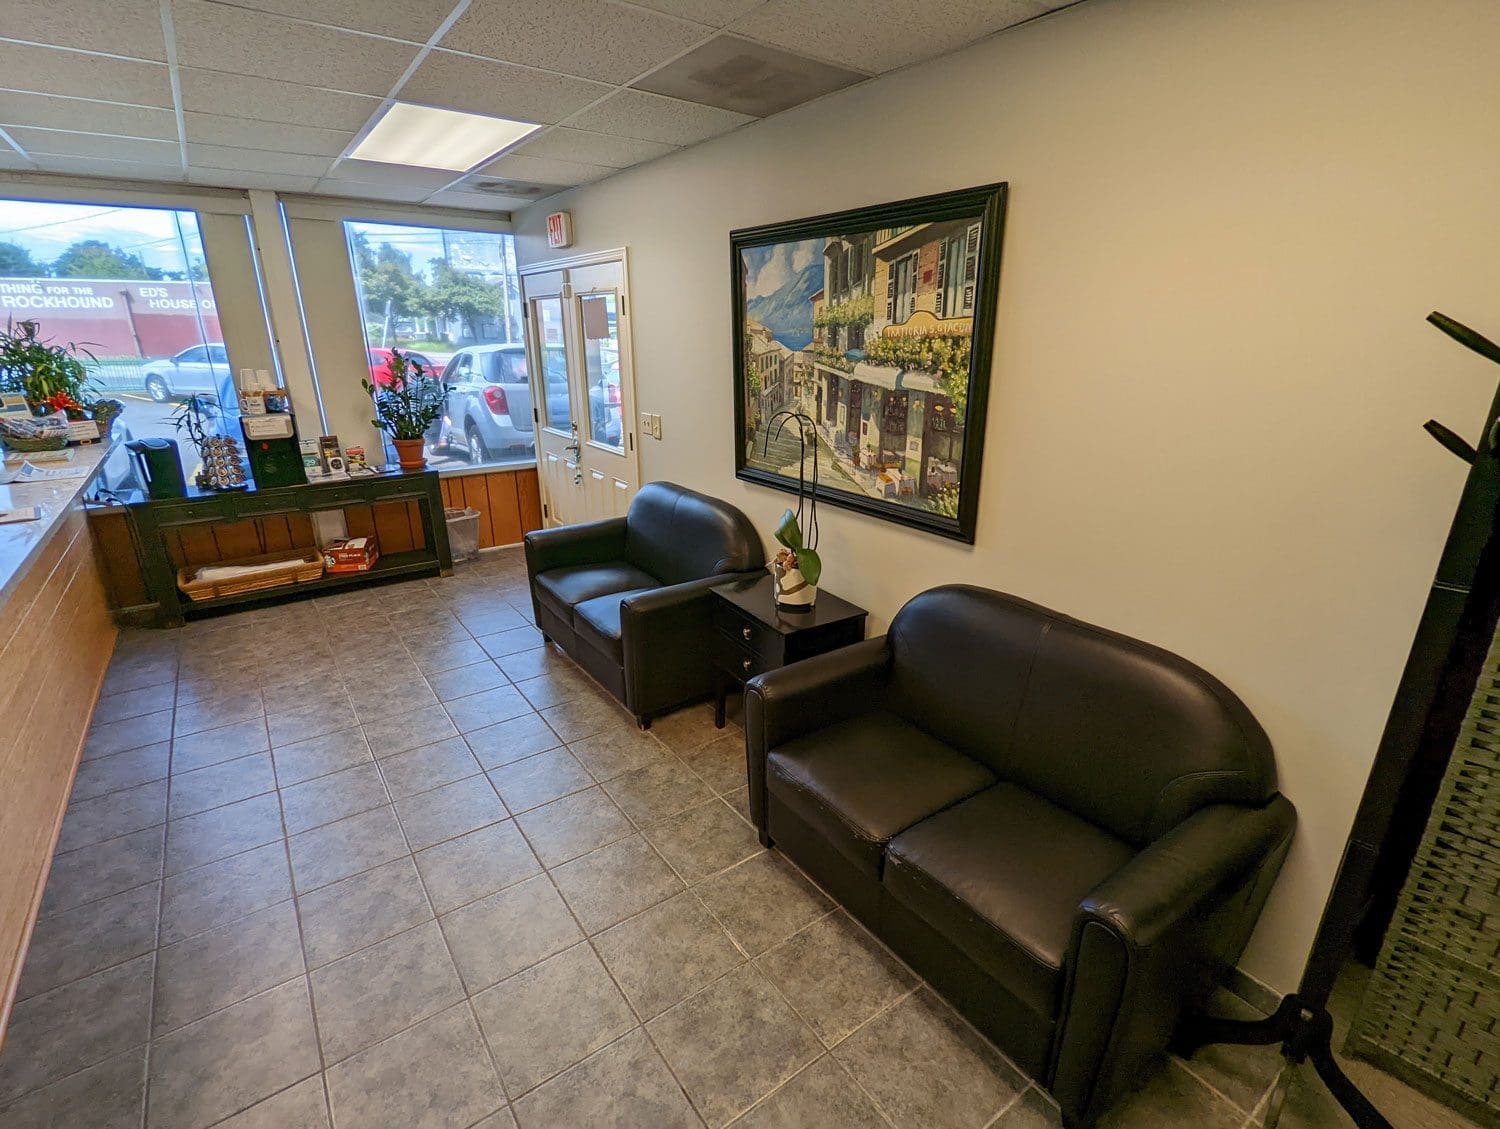 NE Portland Chiropractic Clinic waiting room.